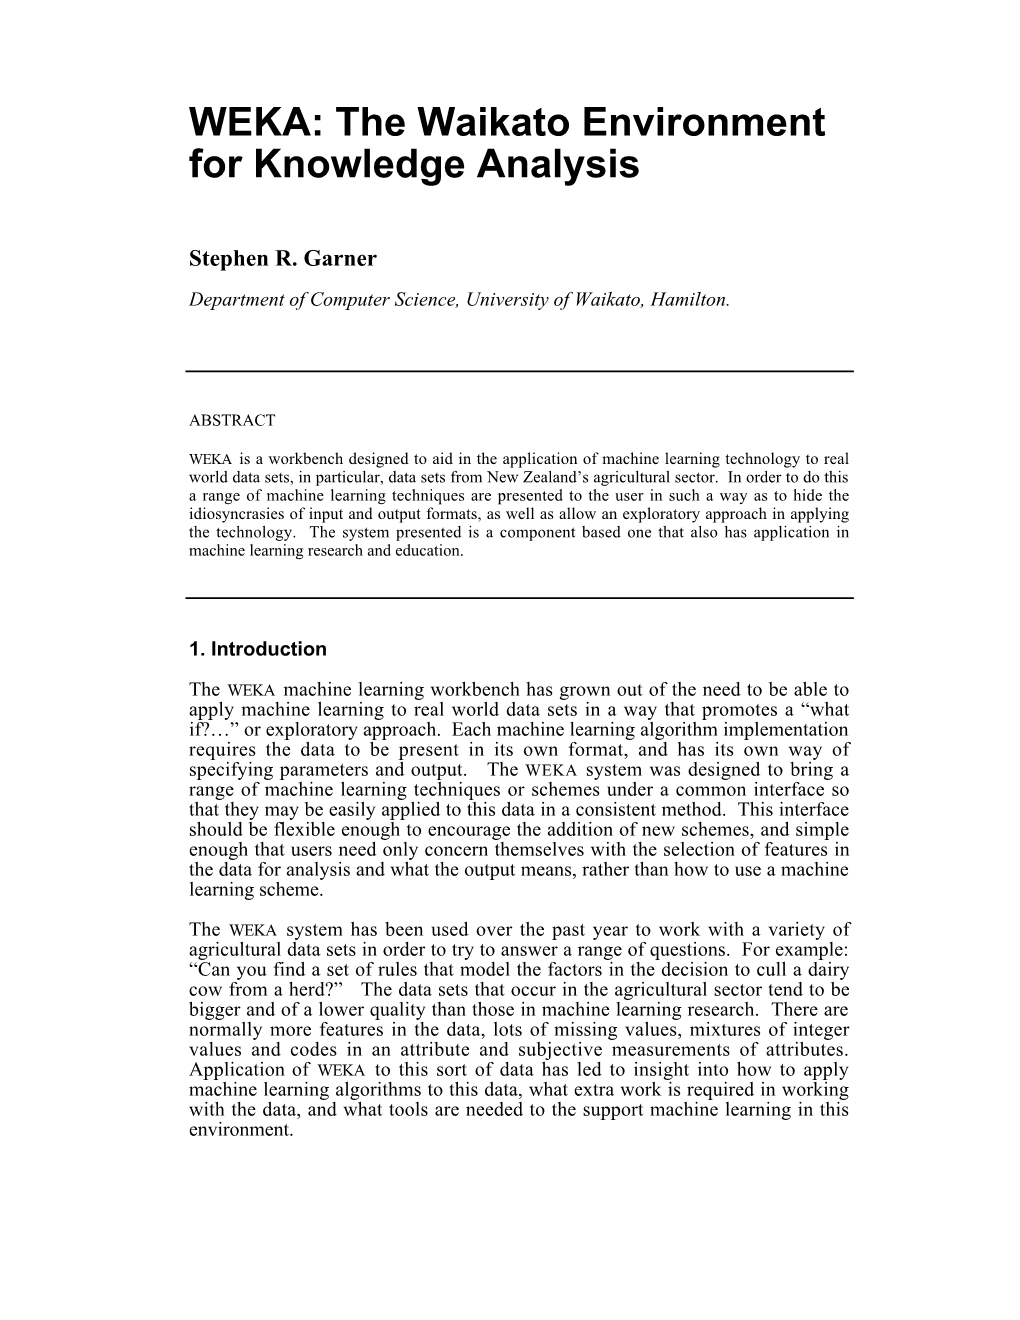 WEKA: the Waikato Environment for Knowledge Analysis